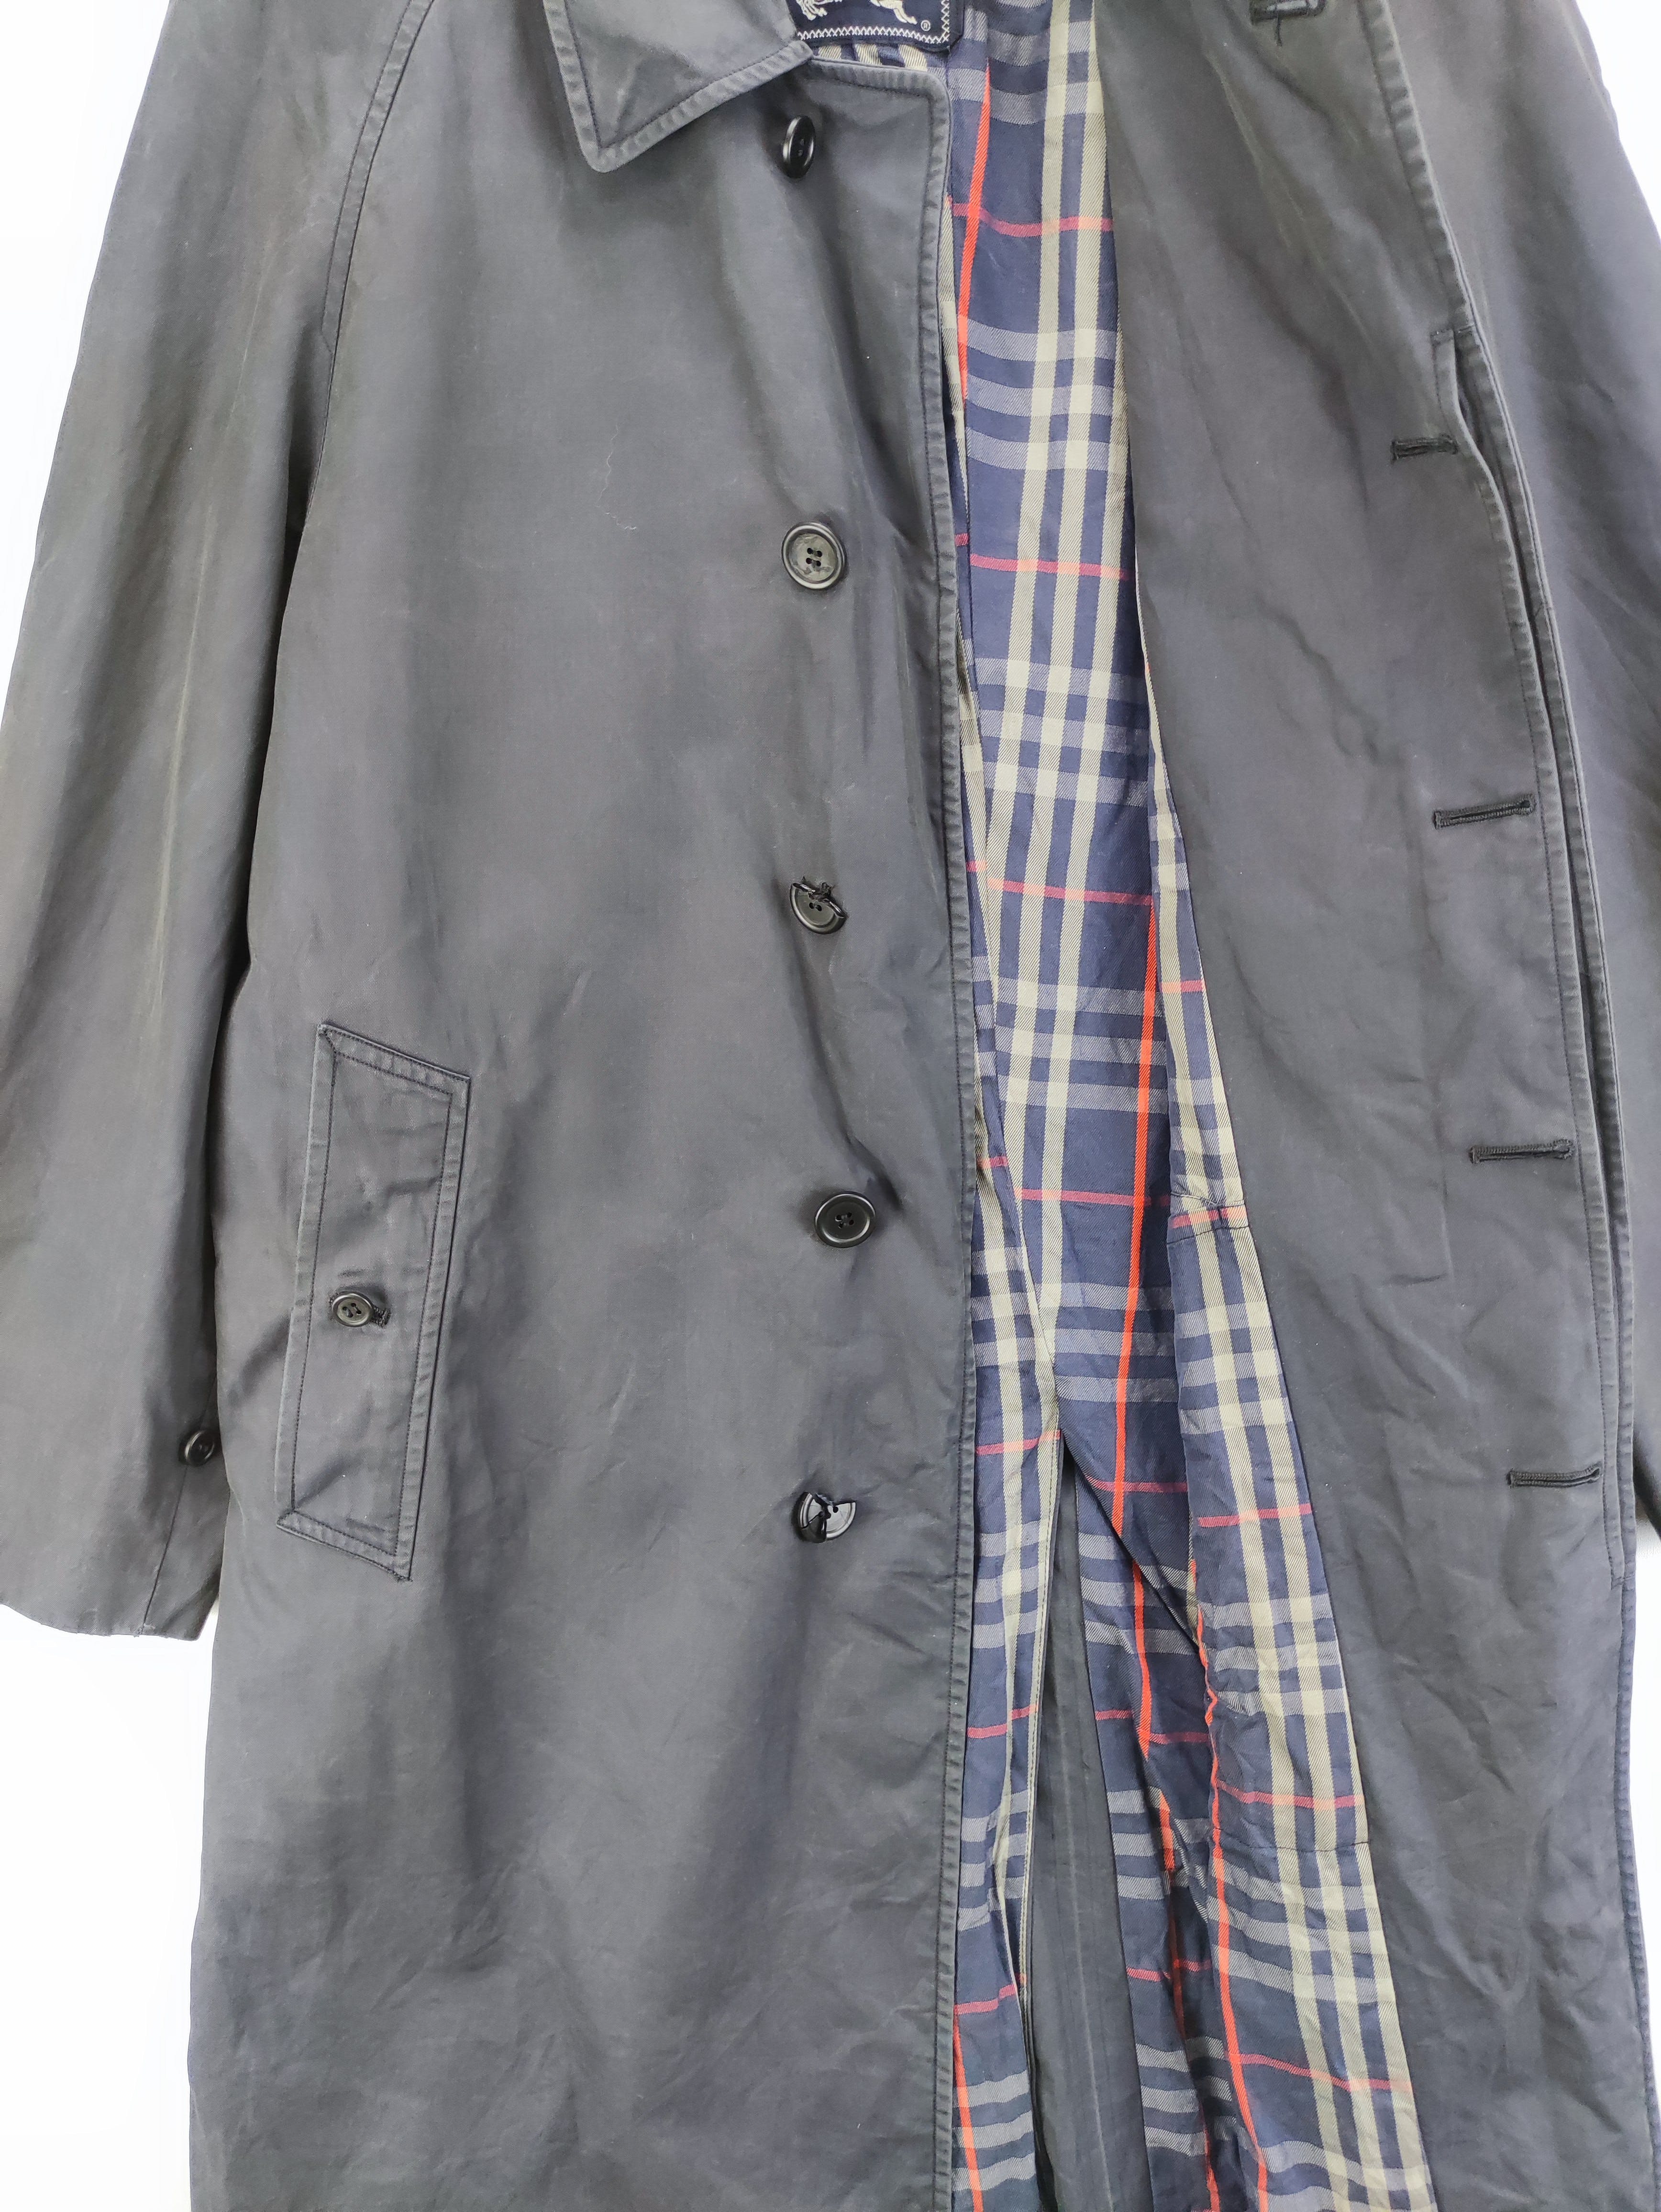 Vintage Burberrys Trench Coat Long Jacket - 2